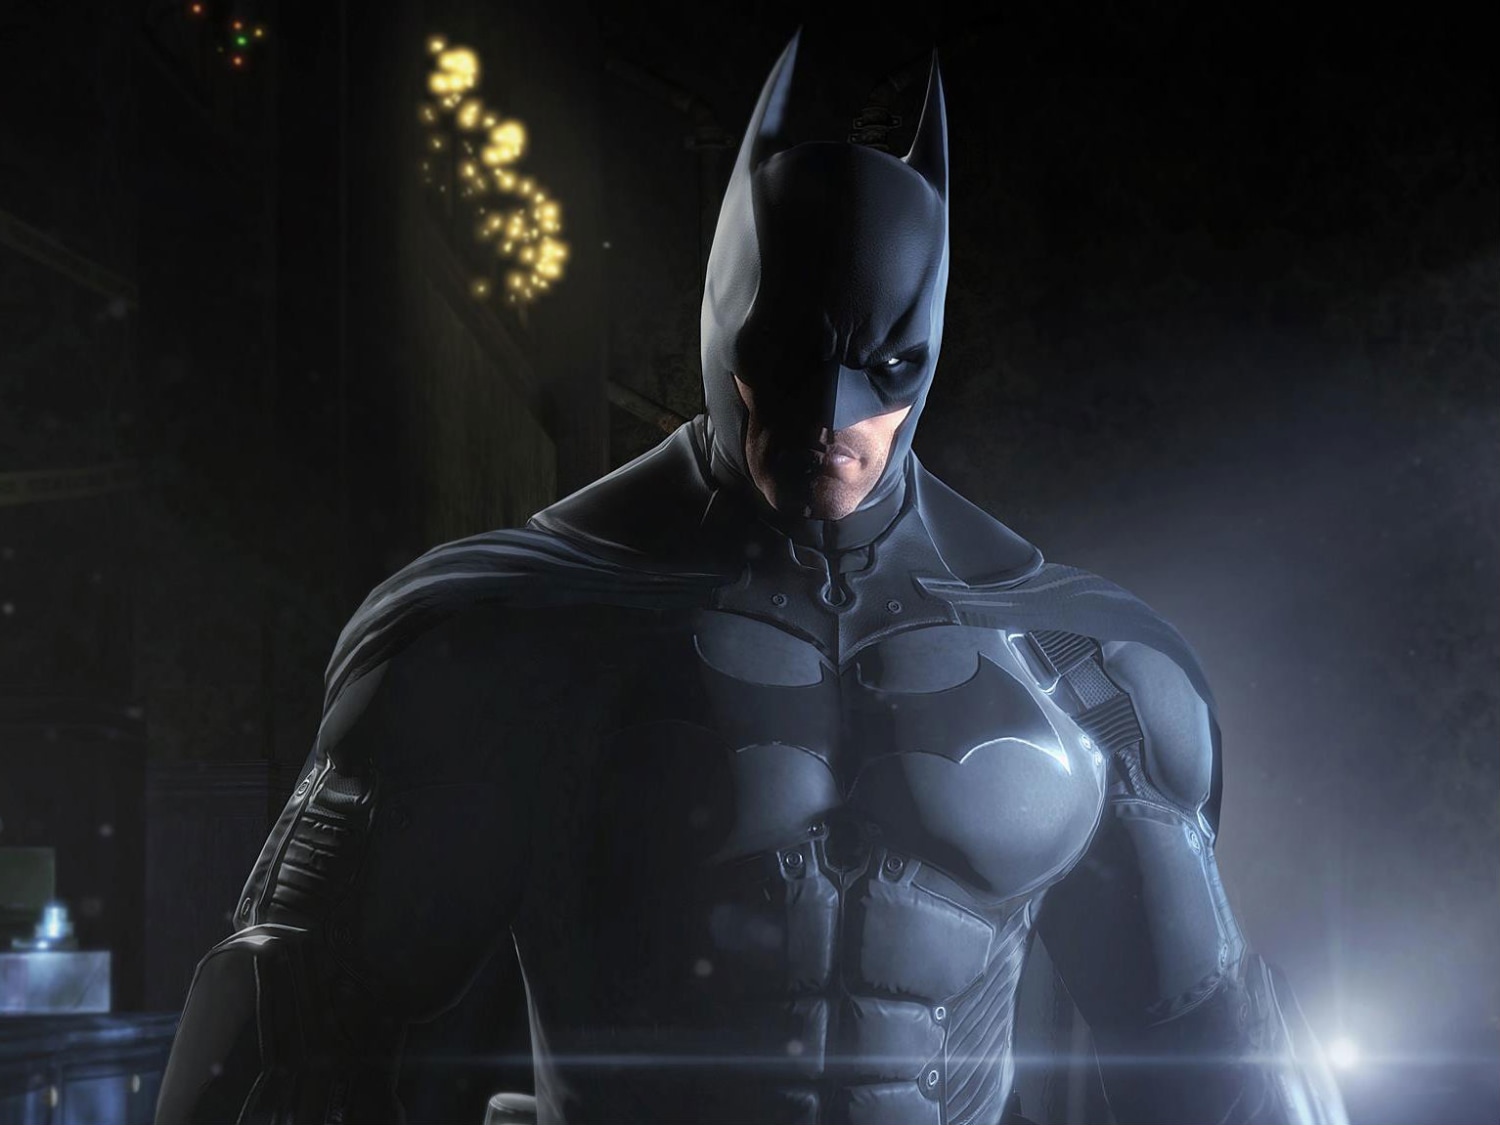 The Dark Knight turns back the clock in 'Arkham Origins'